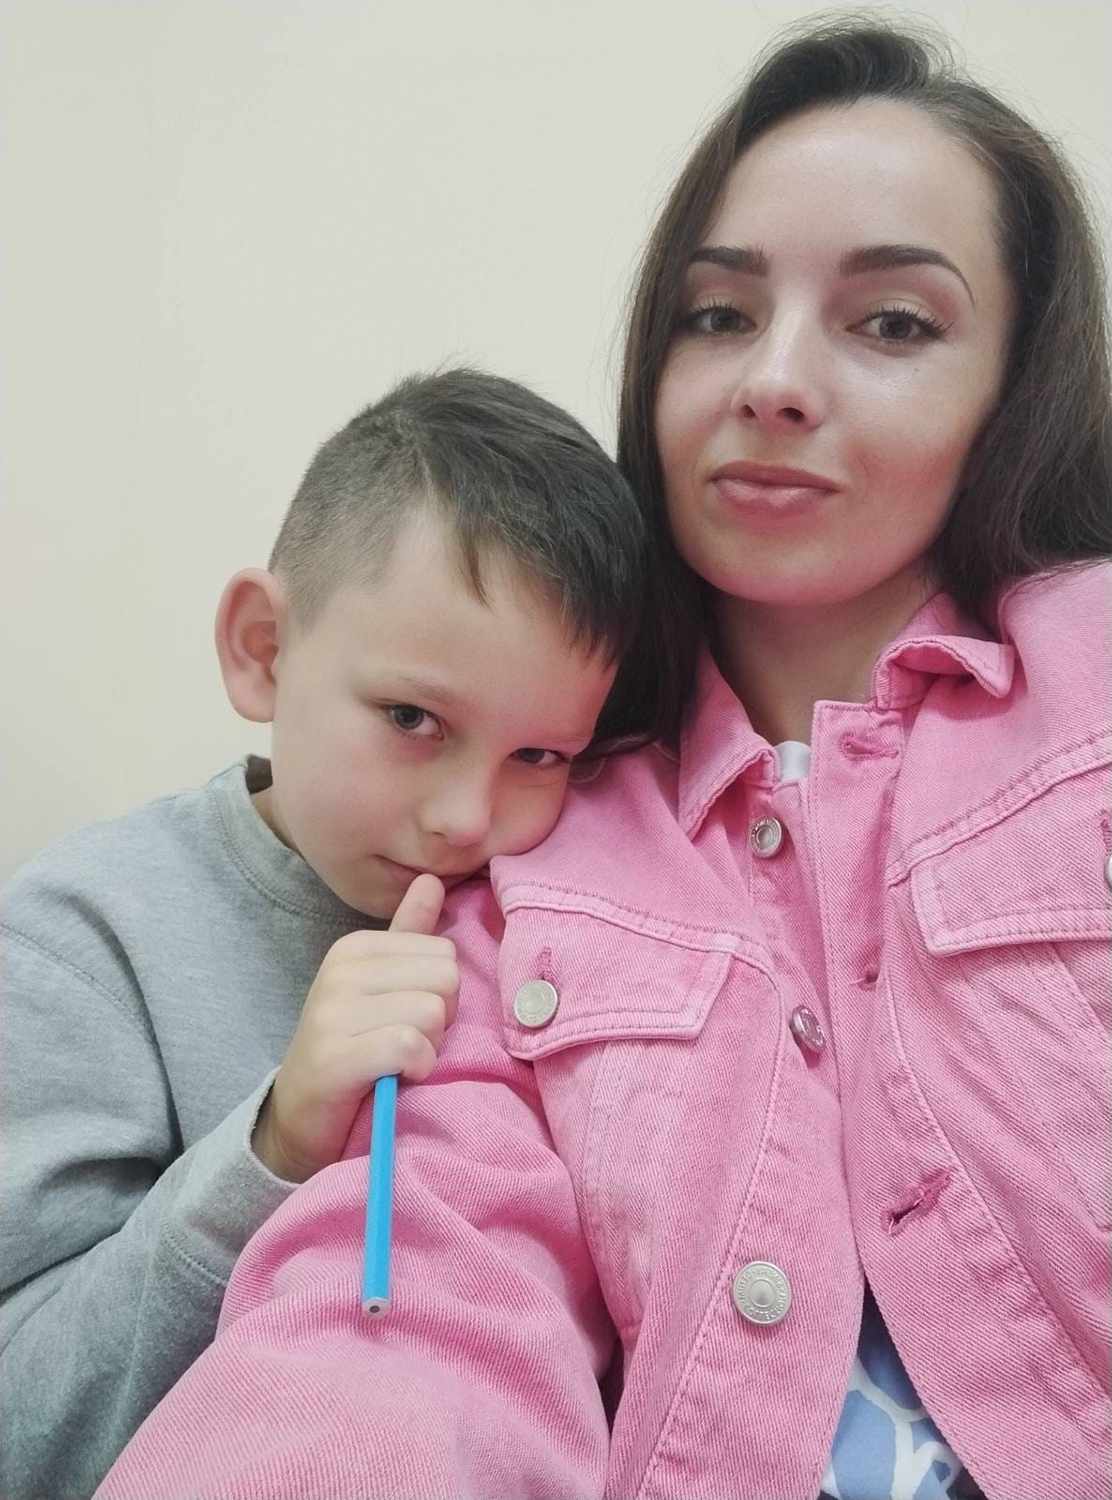 Roman and Galyna Oleksiv Ukranian mother killed, son badly injured